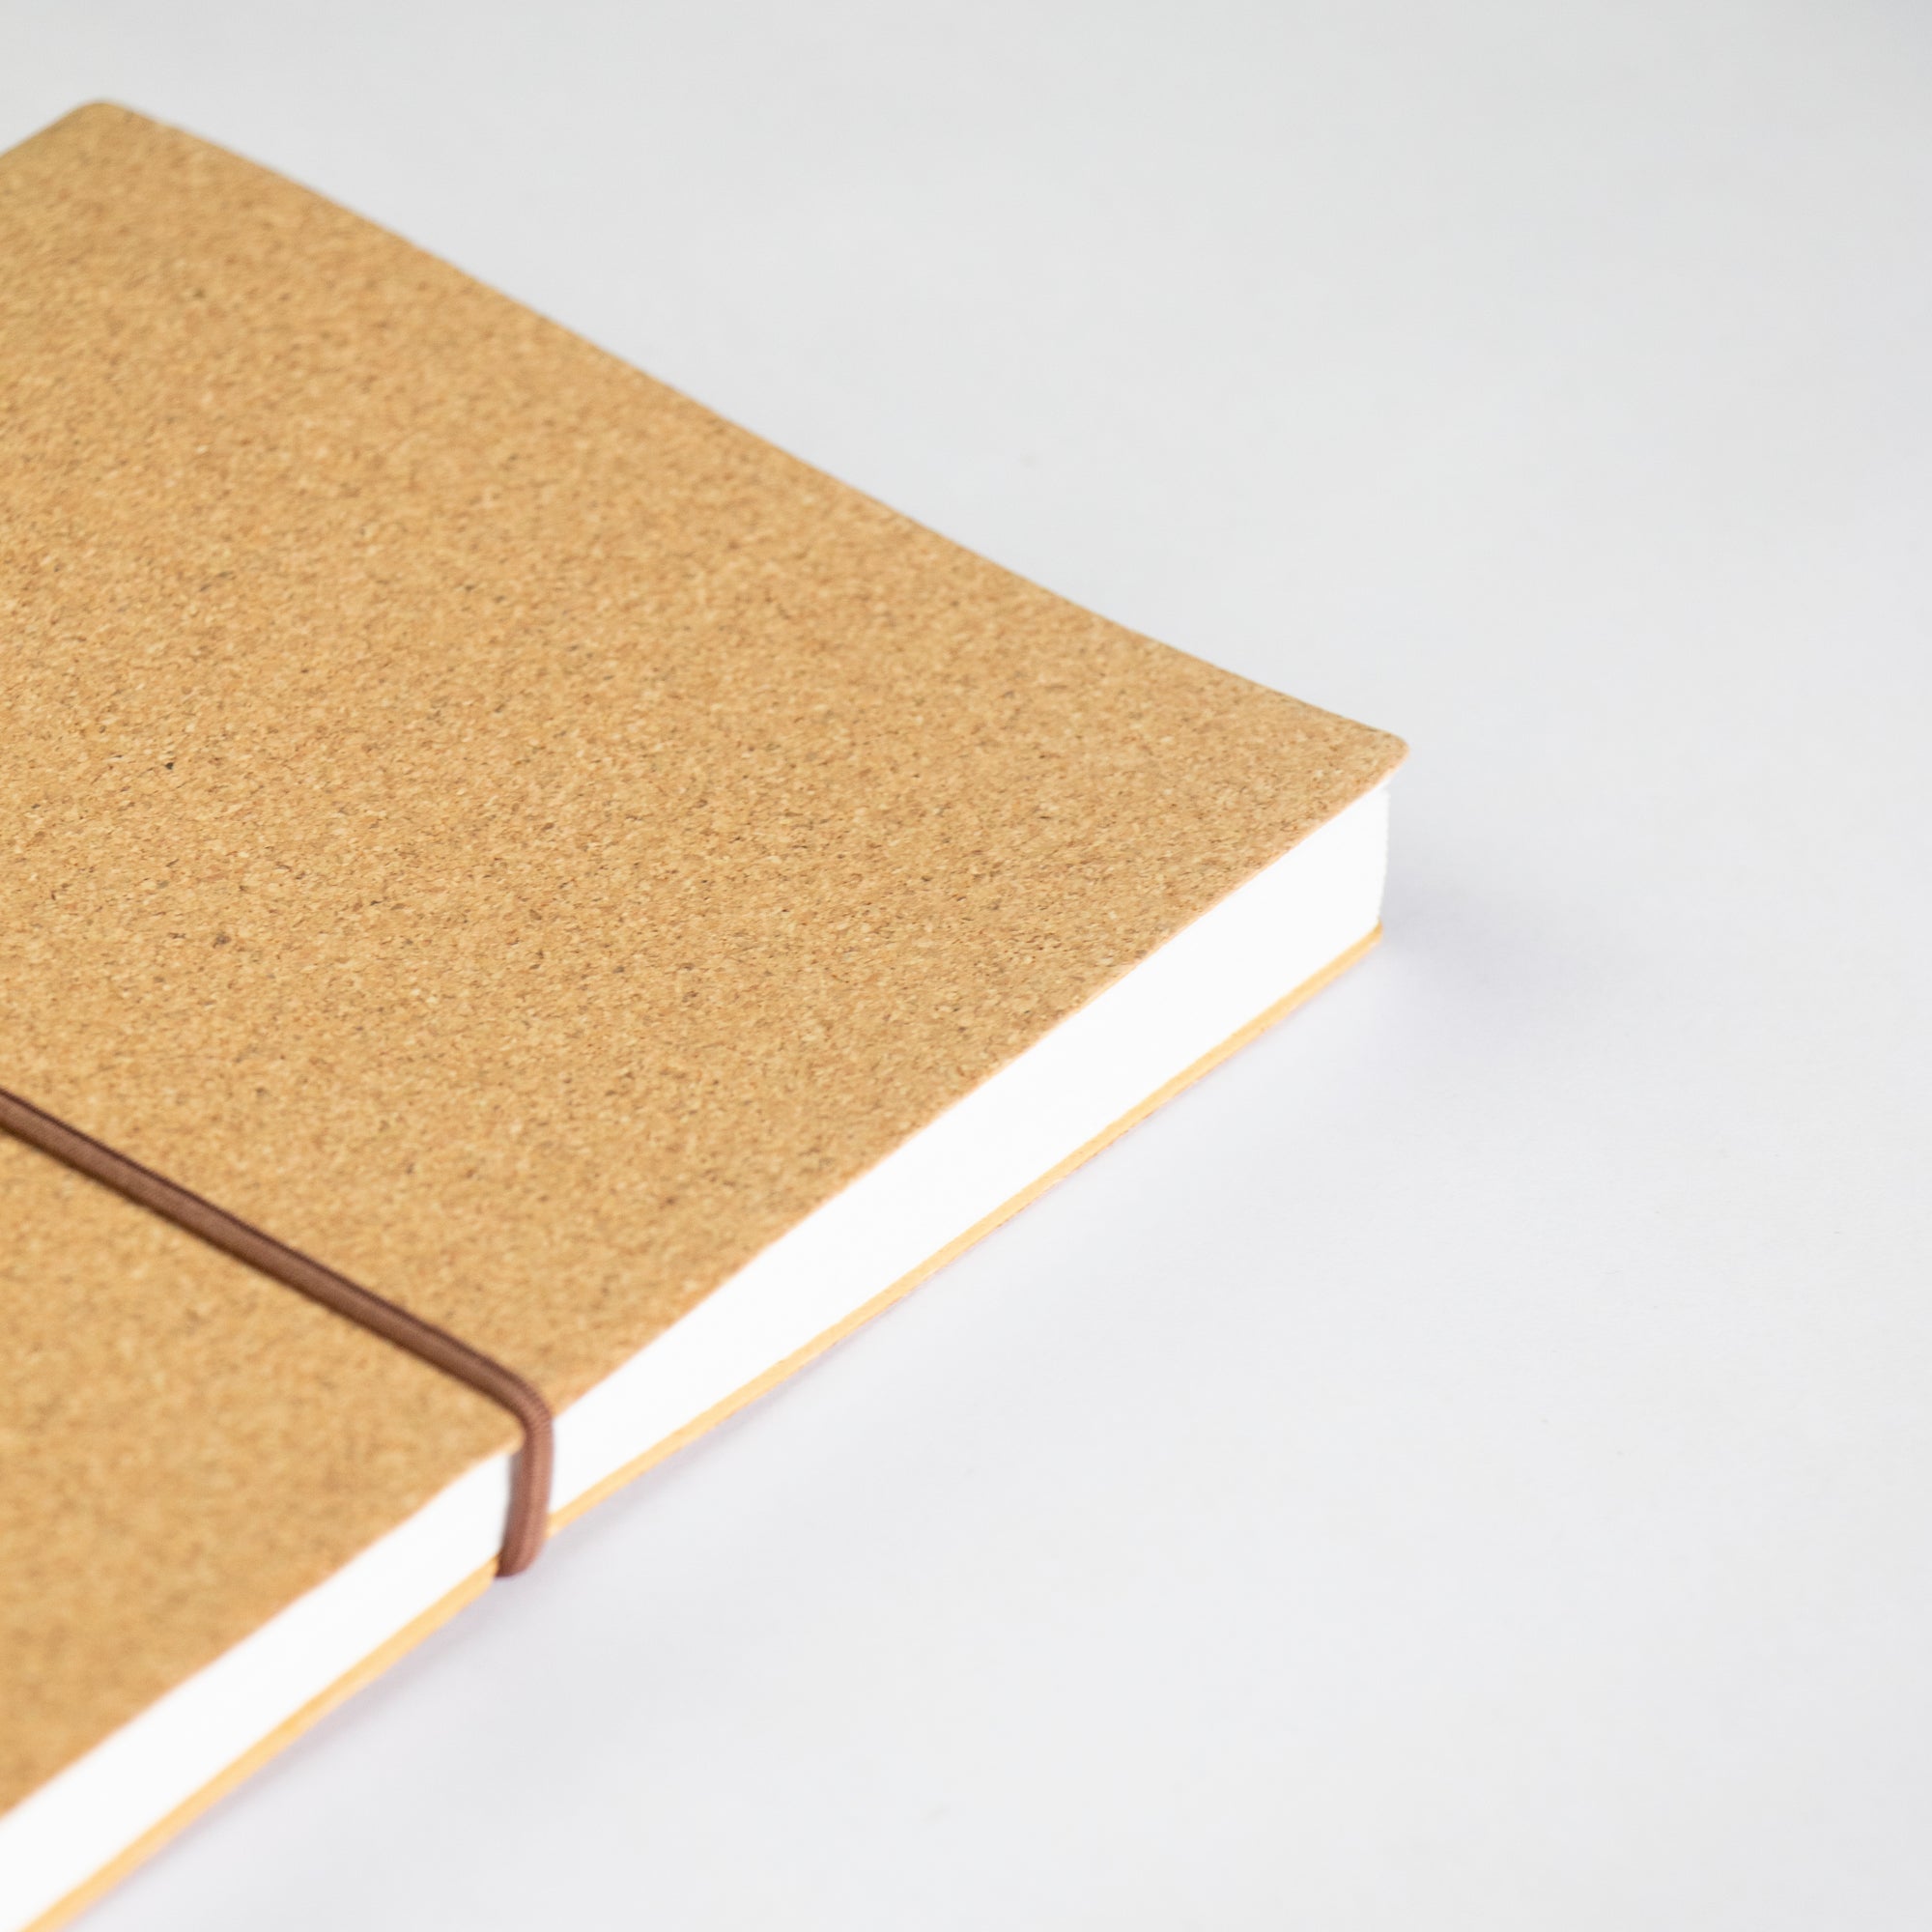 Sustainable cork A5 notebook, sand range